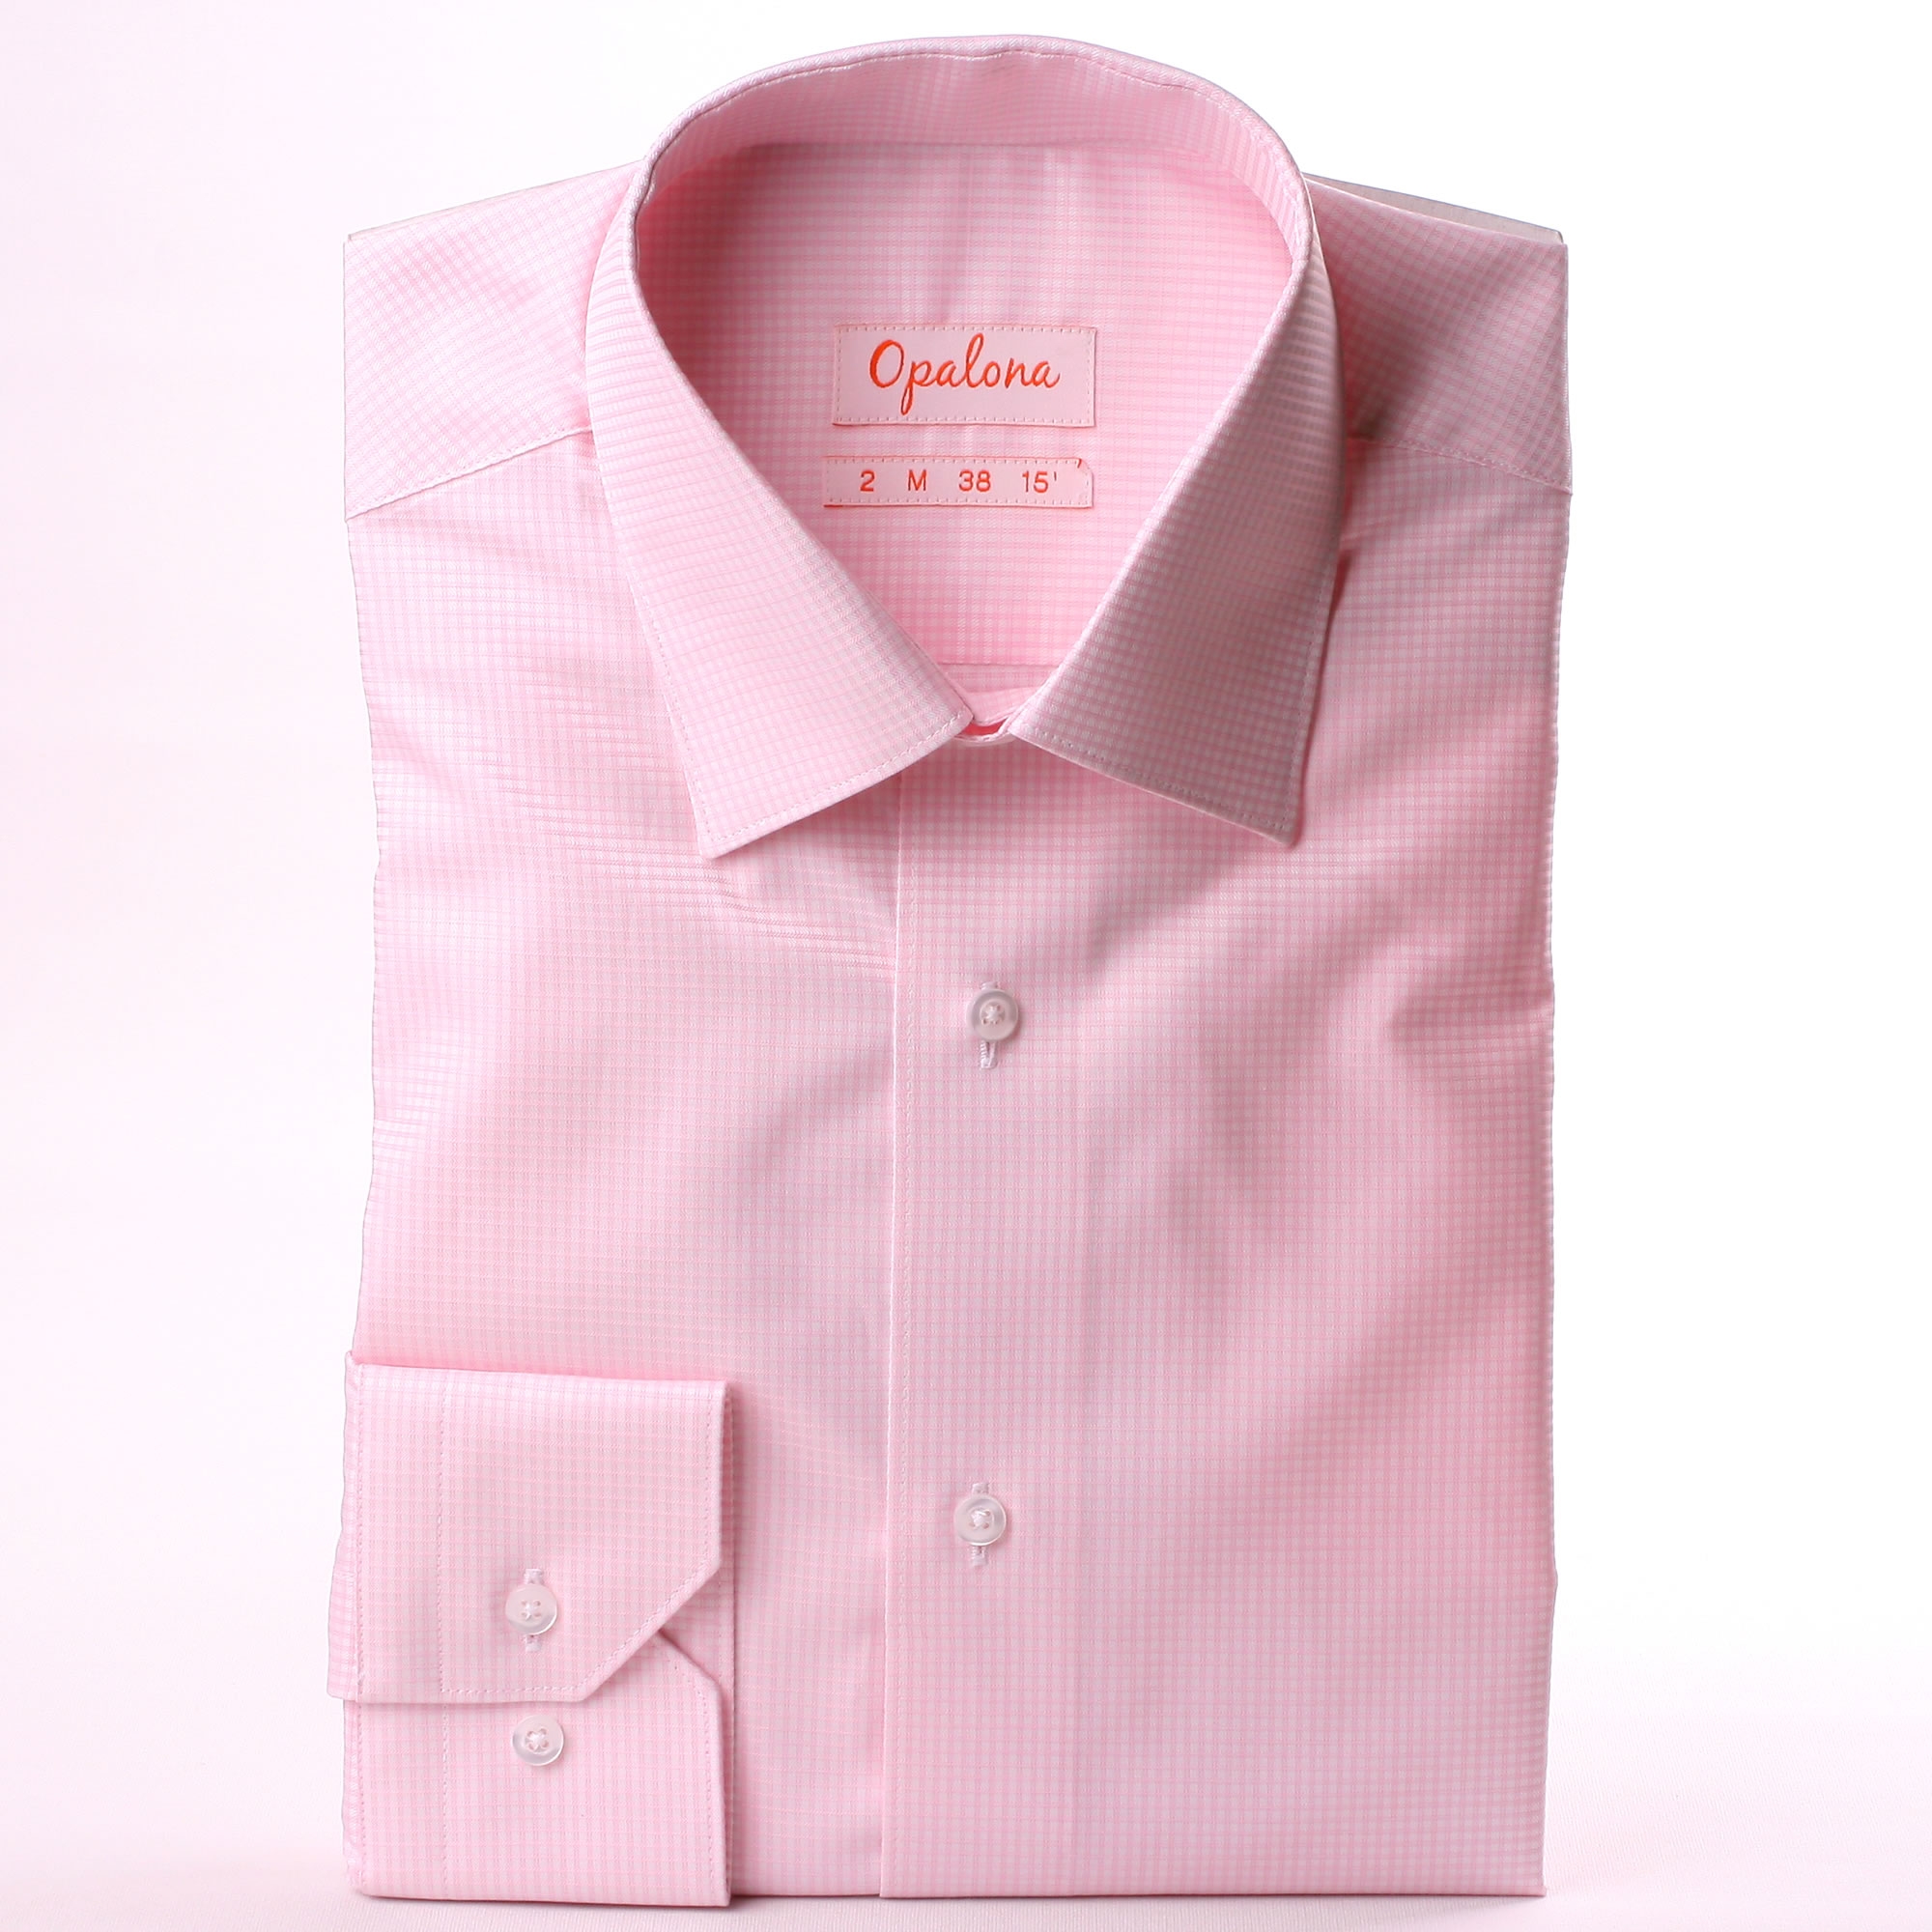 Pink and white gingham checkered shirt